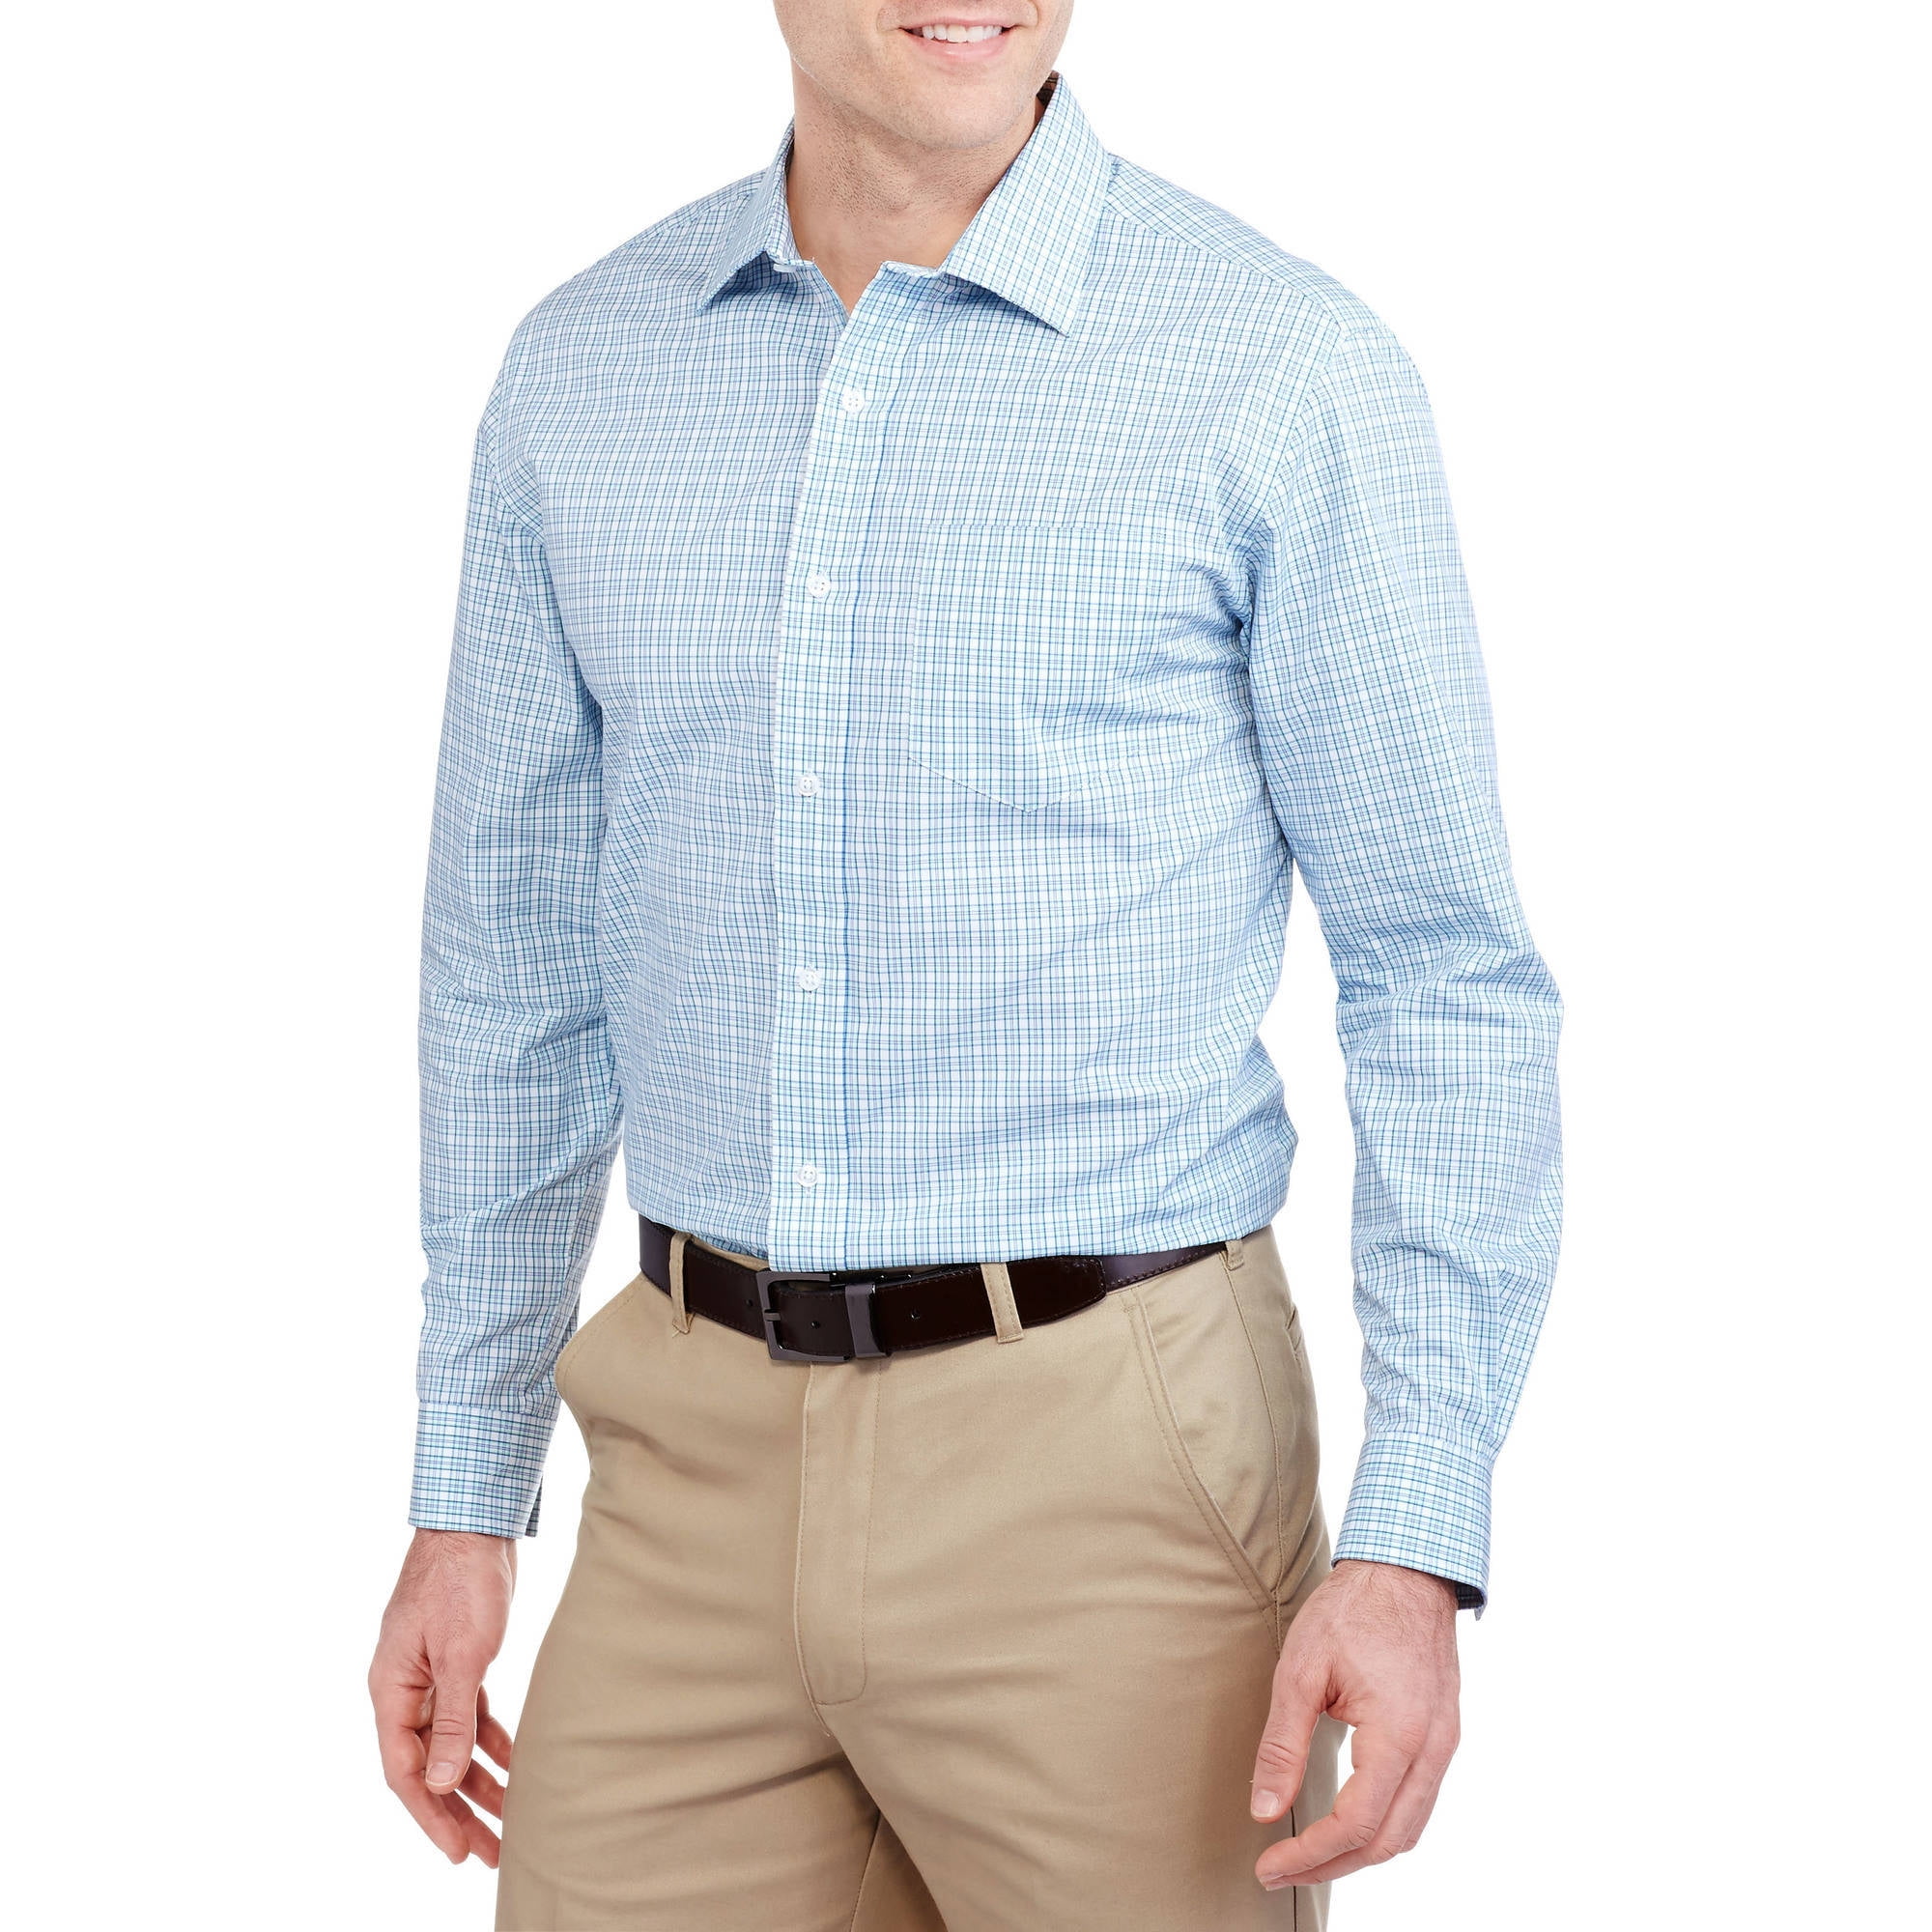 Big Men's Long Sleeve Fashion Dress Shirt - Walmart.com